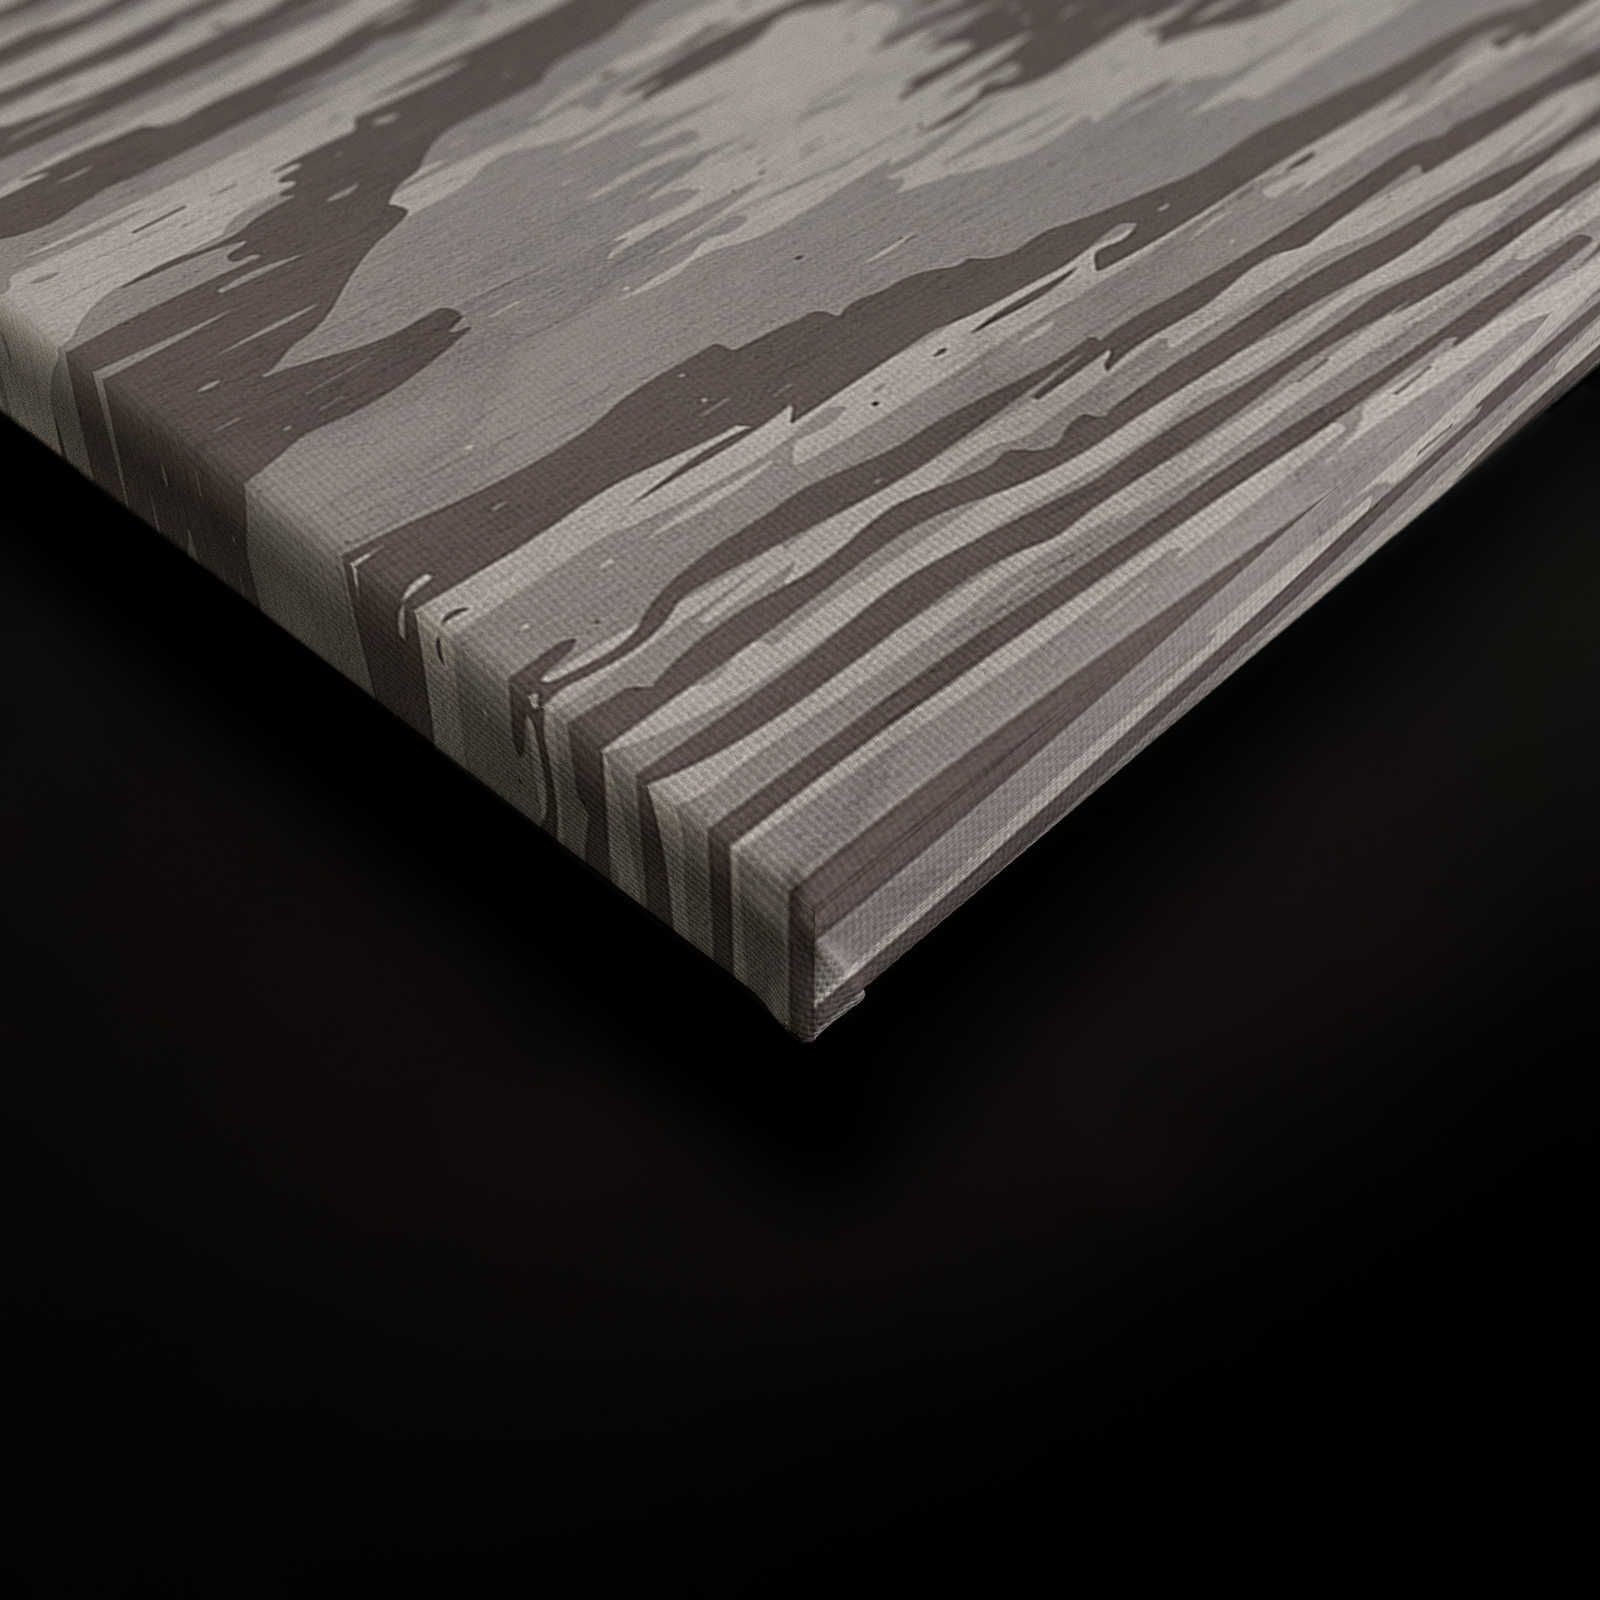             Bounty 4 - Wood-look Canvas Painting Grain XXL in Brown & Grey - 0.90 m x 0.60 m
        